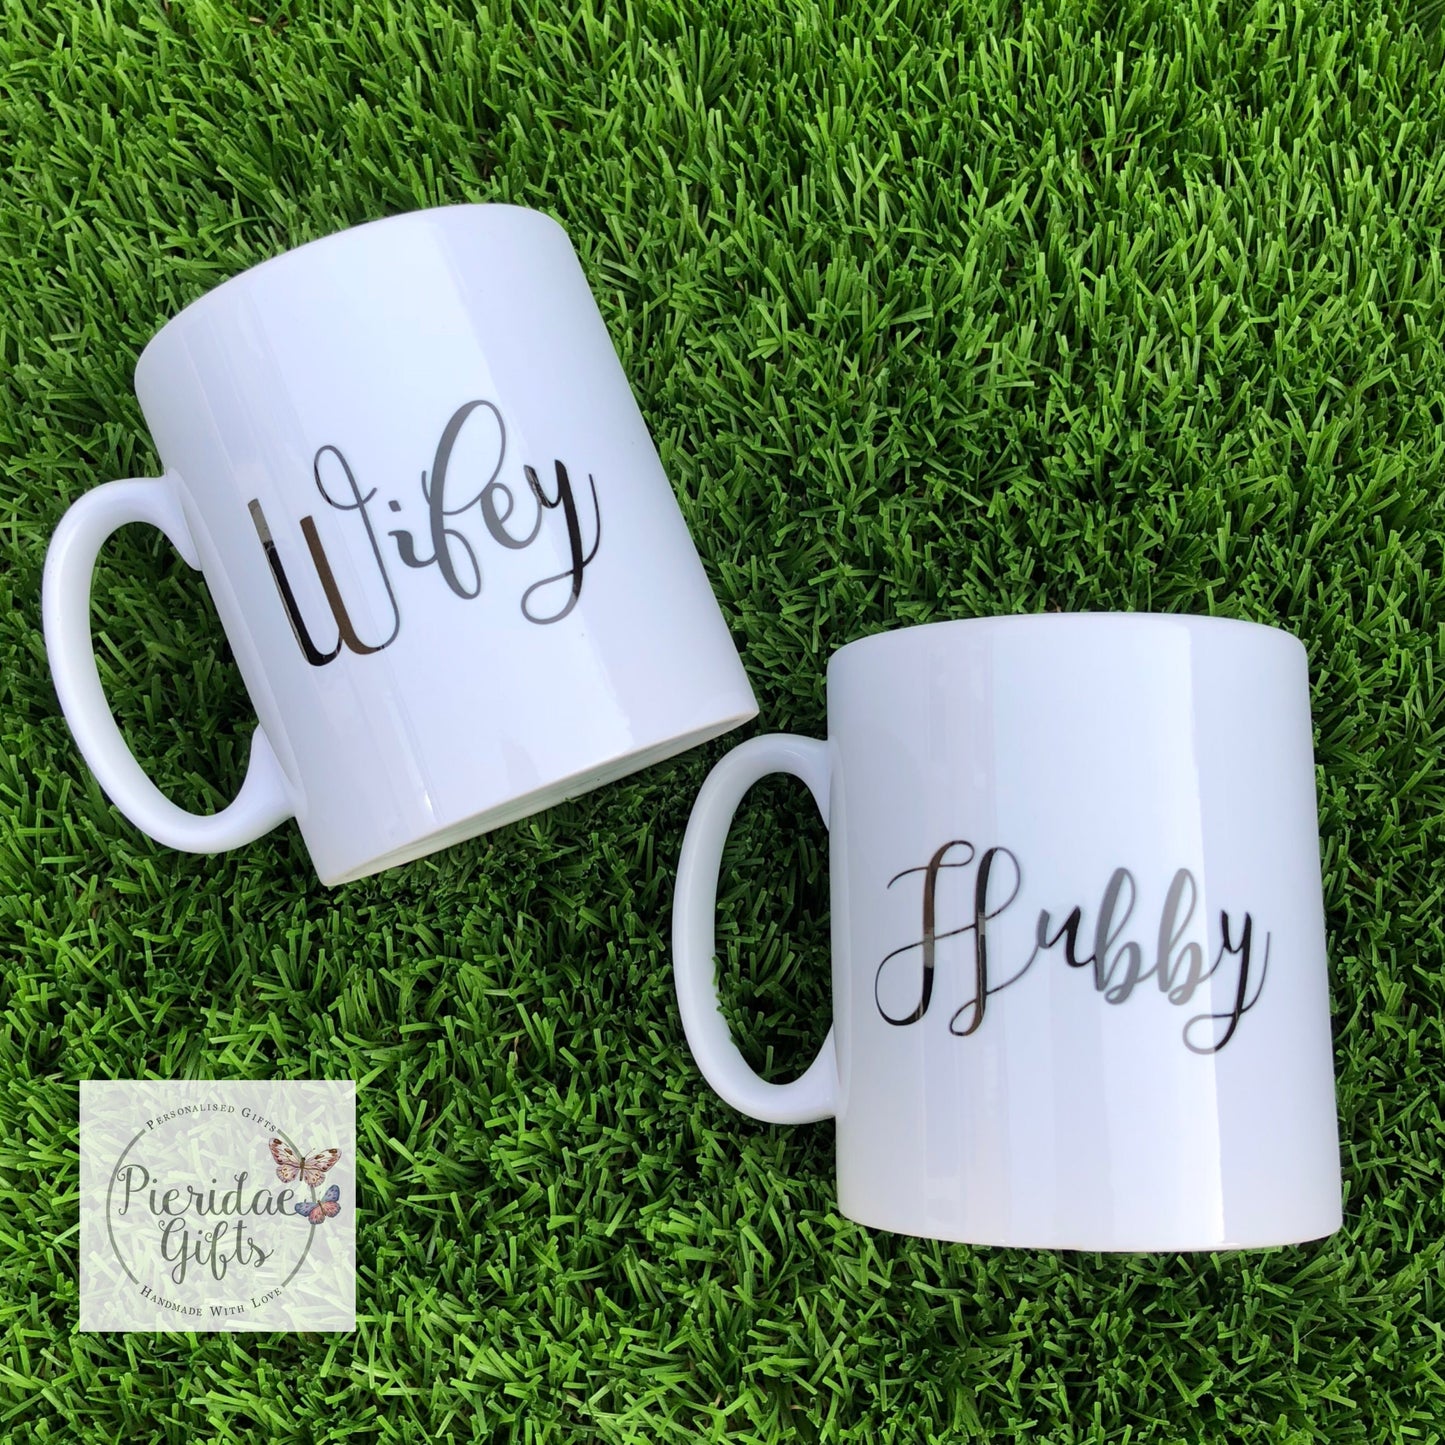 Wifey and Hubby Mug Set